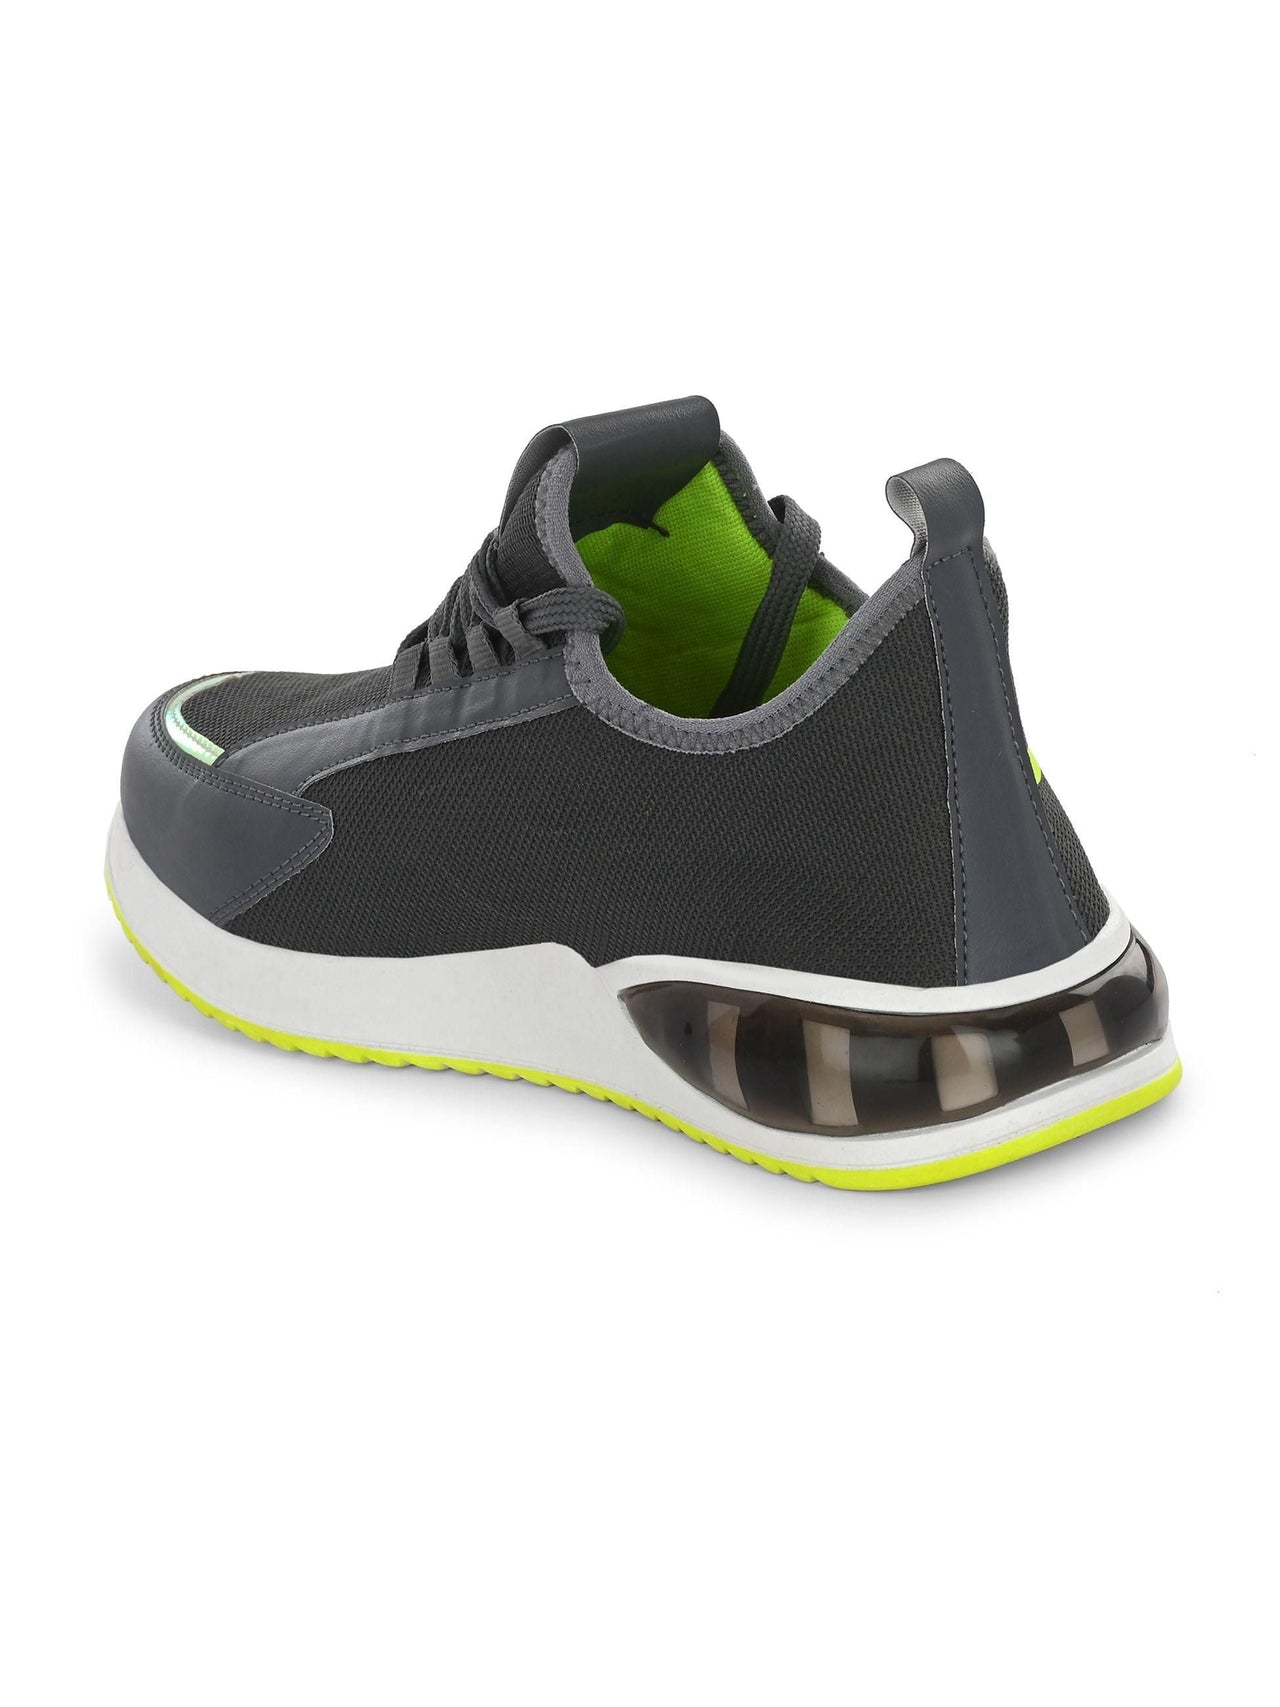 Bucik Men's Grey Synthetic Leather Lace-Up Sport Shoe